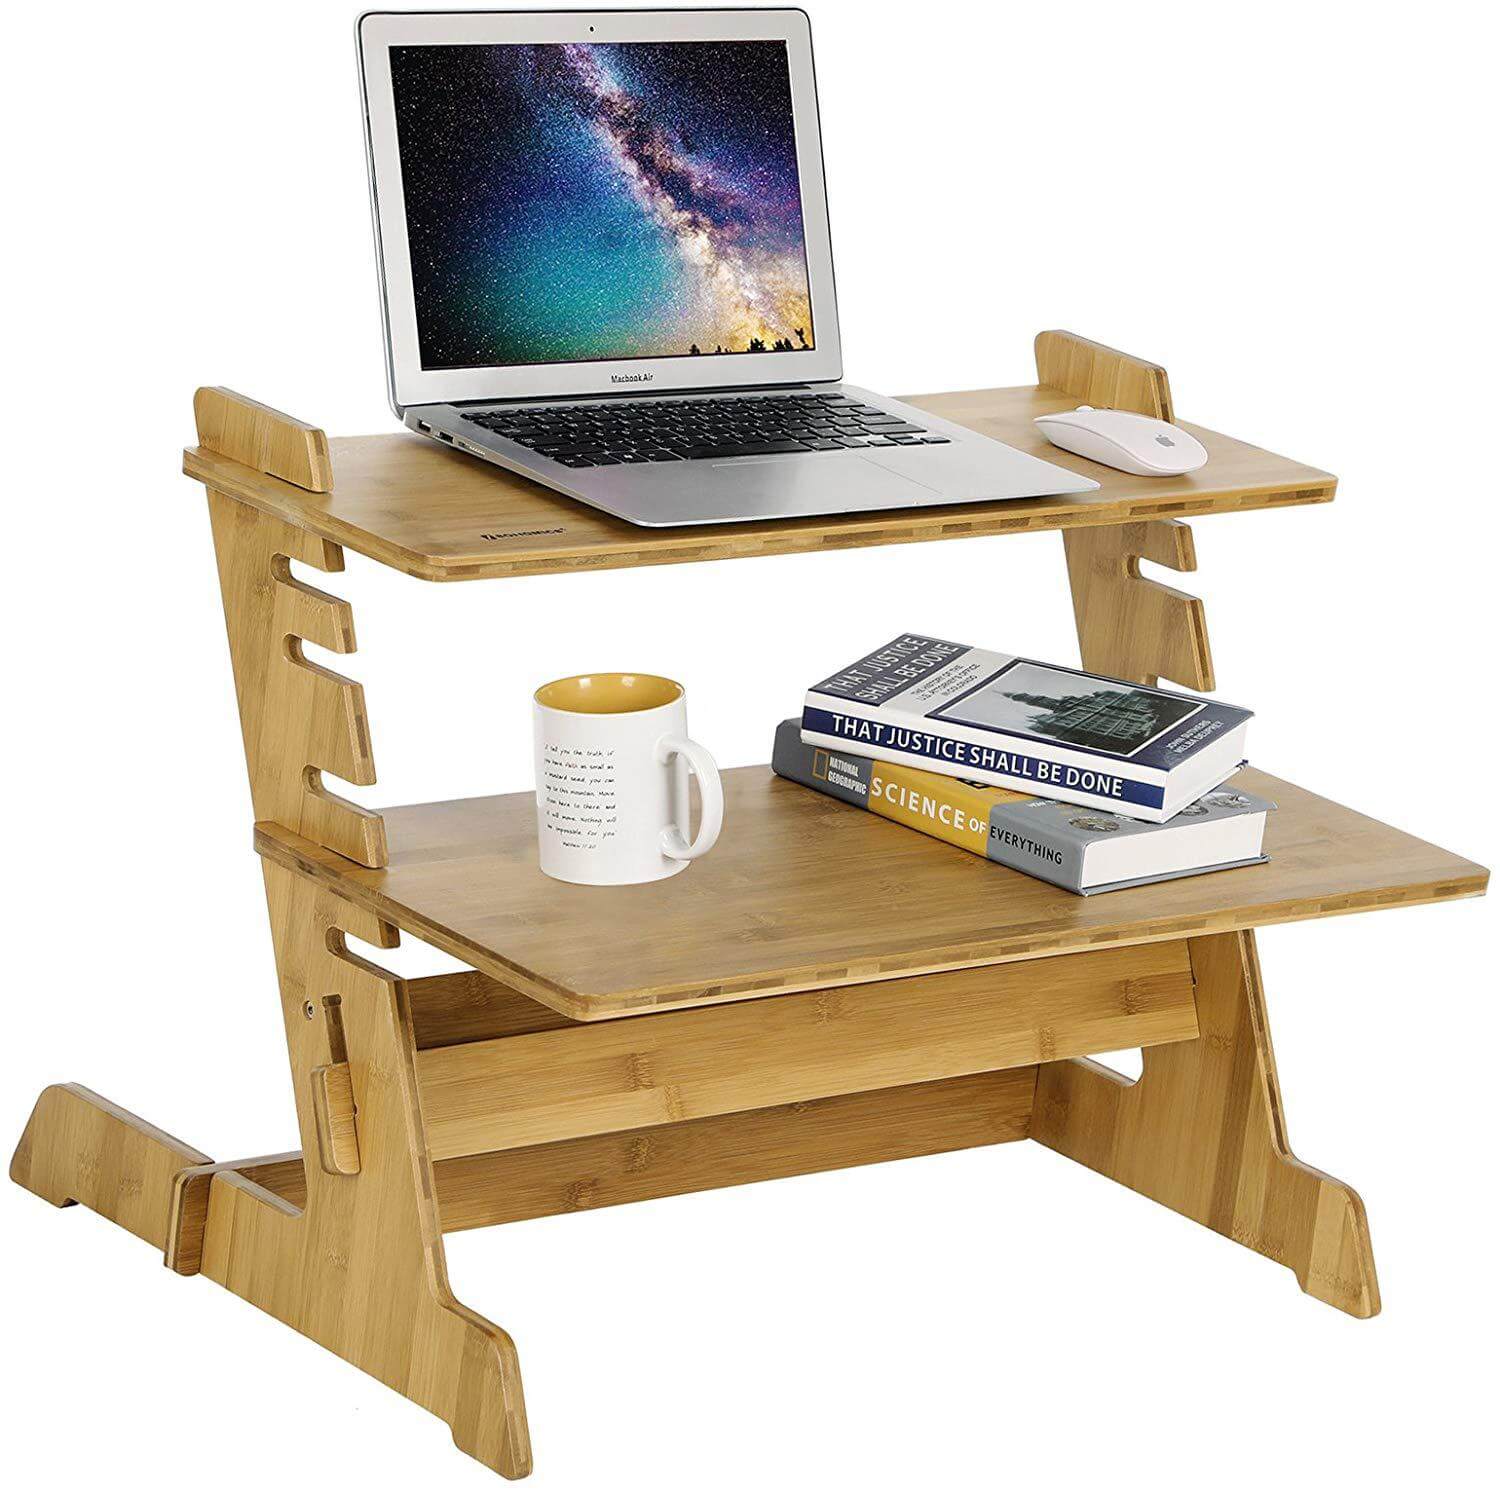 Standing laptop desk